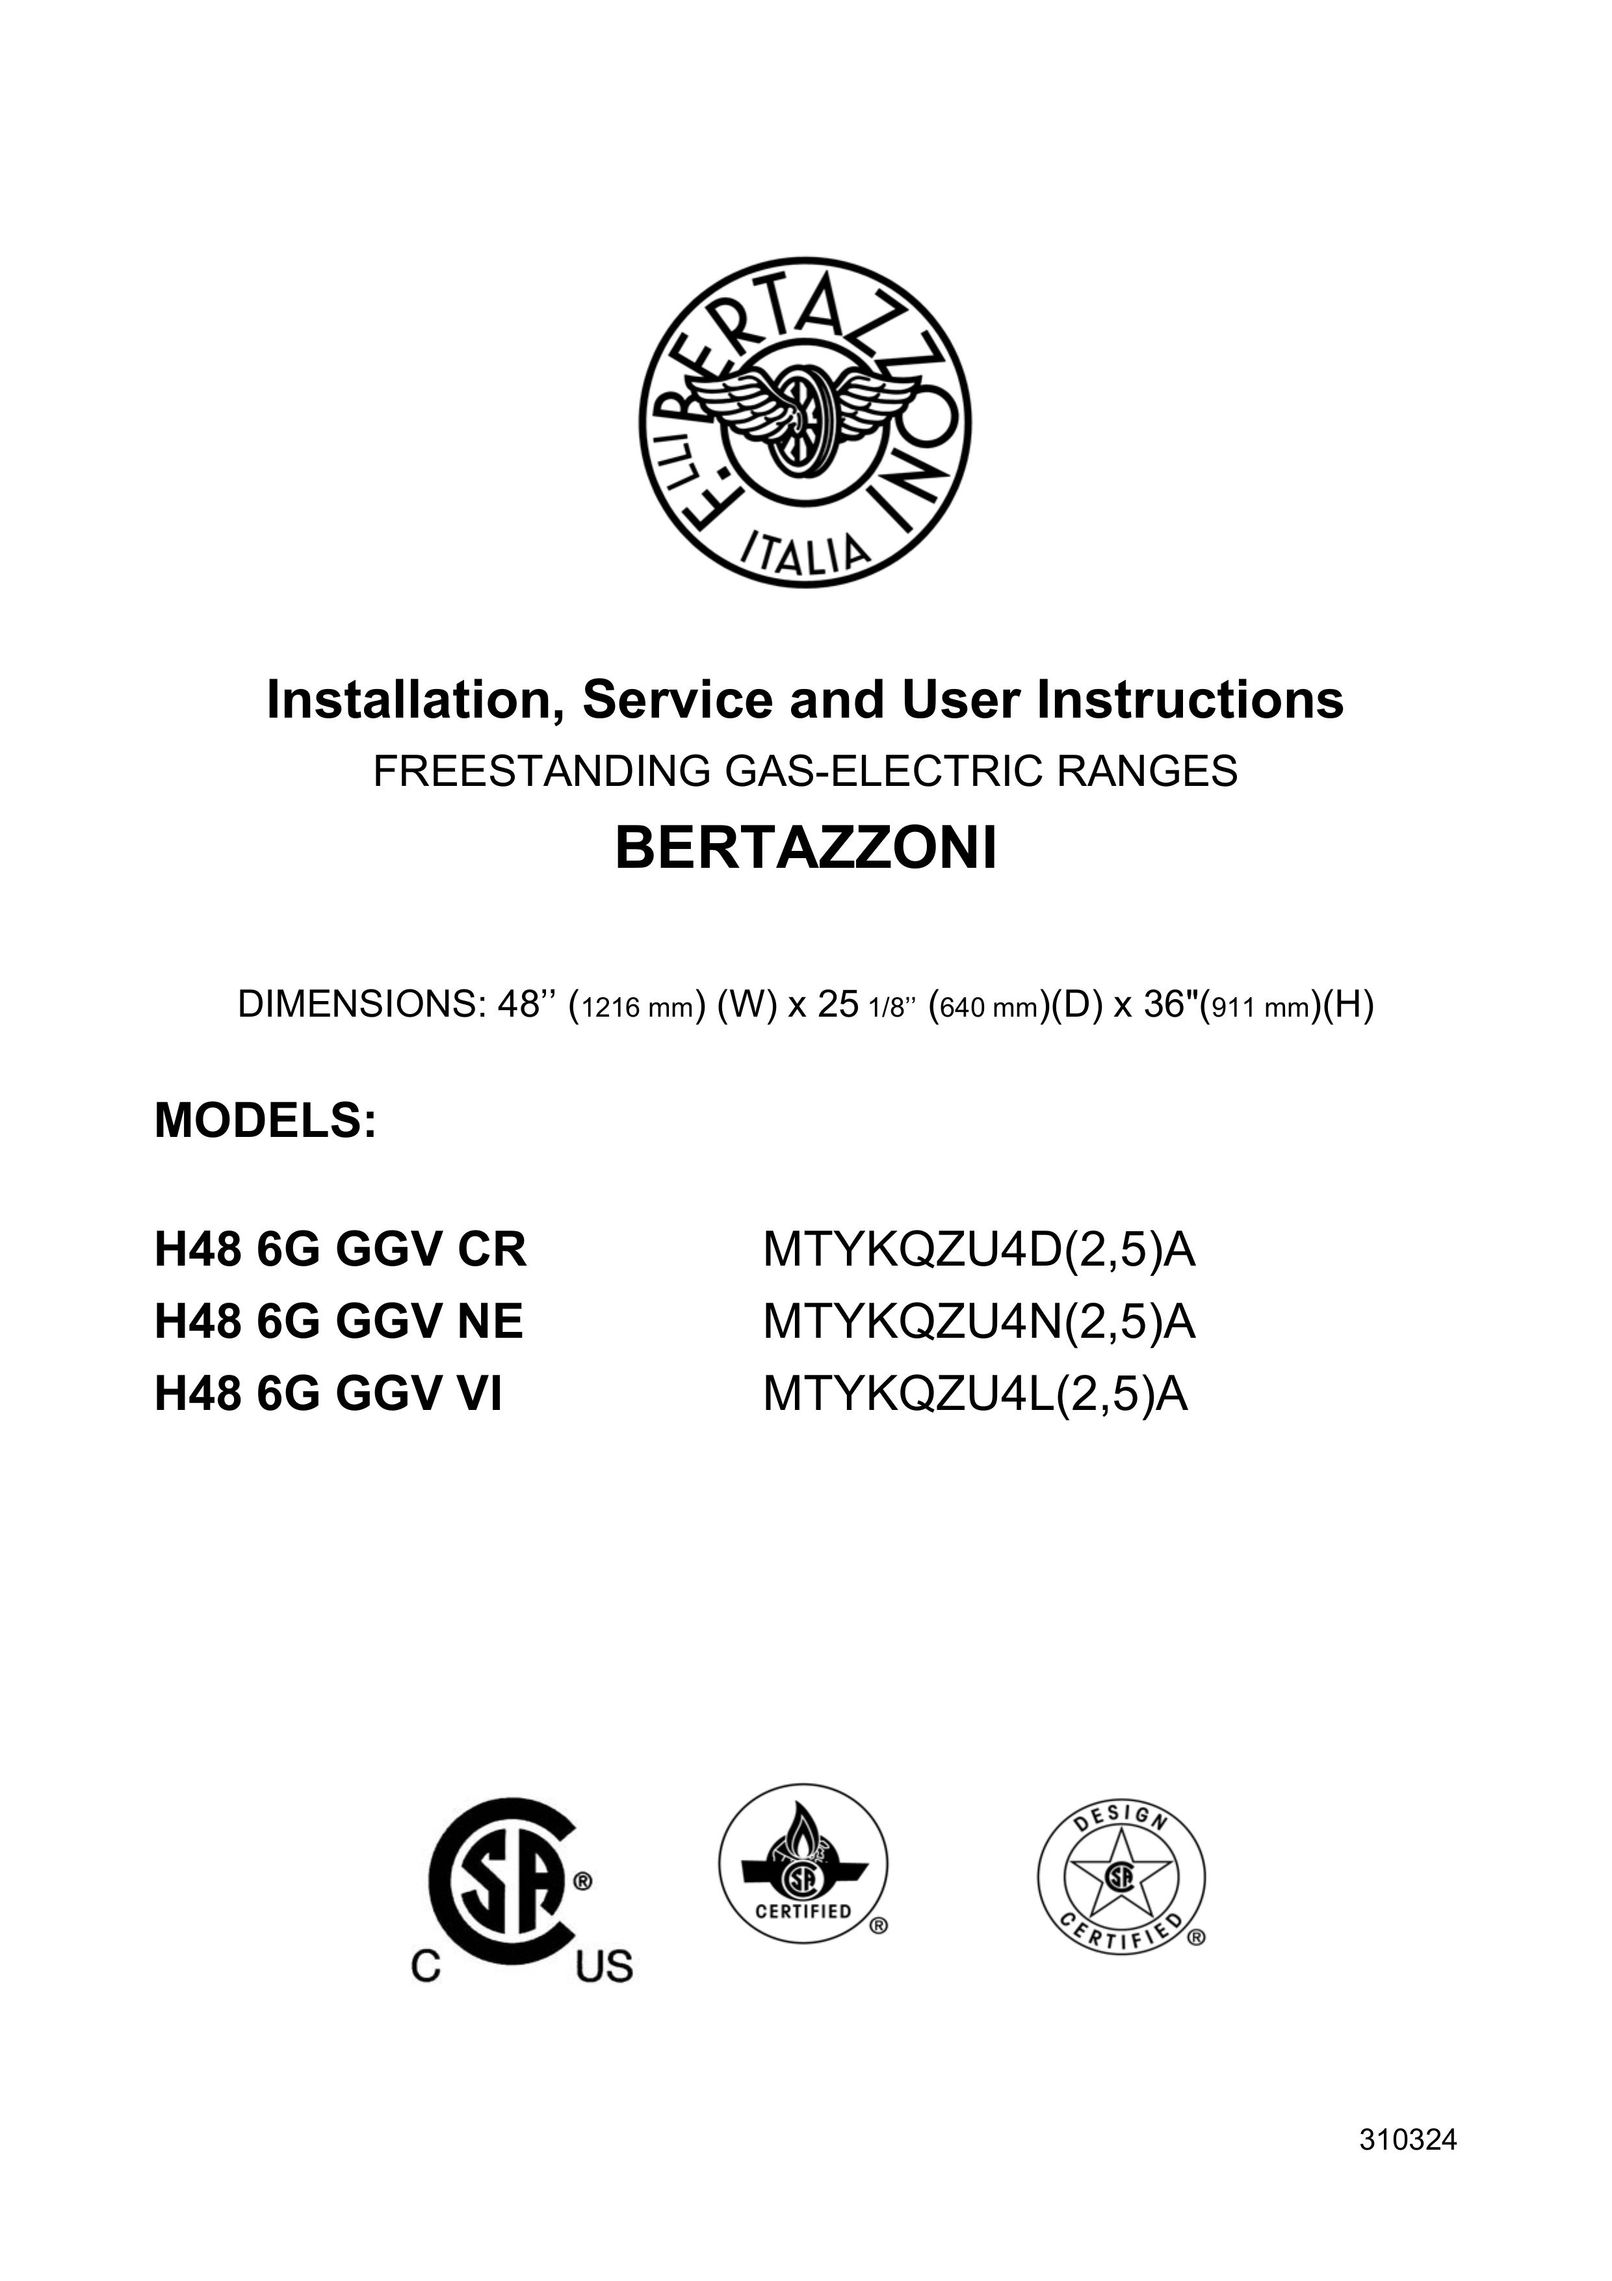 Bertazzoni H48 6G GGV CR Range User Manual